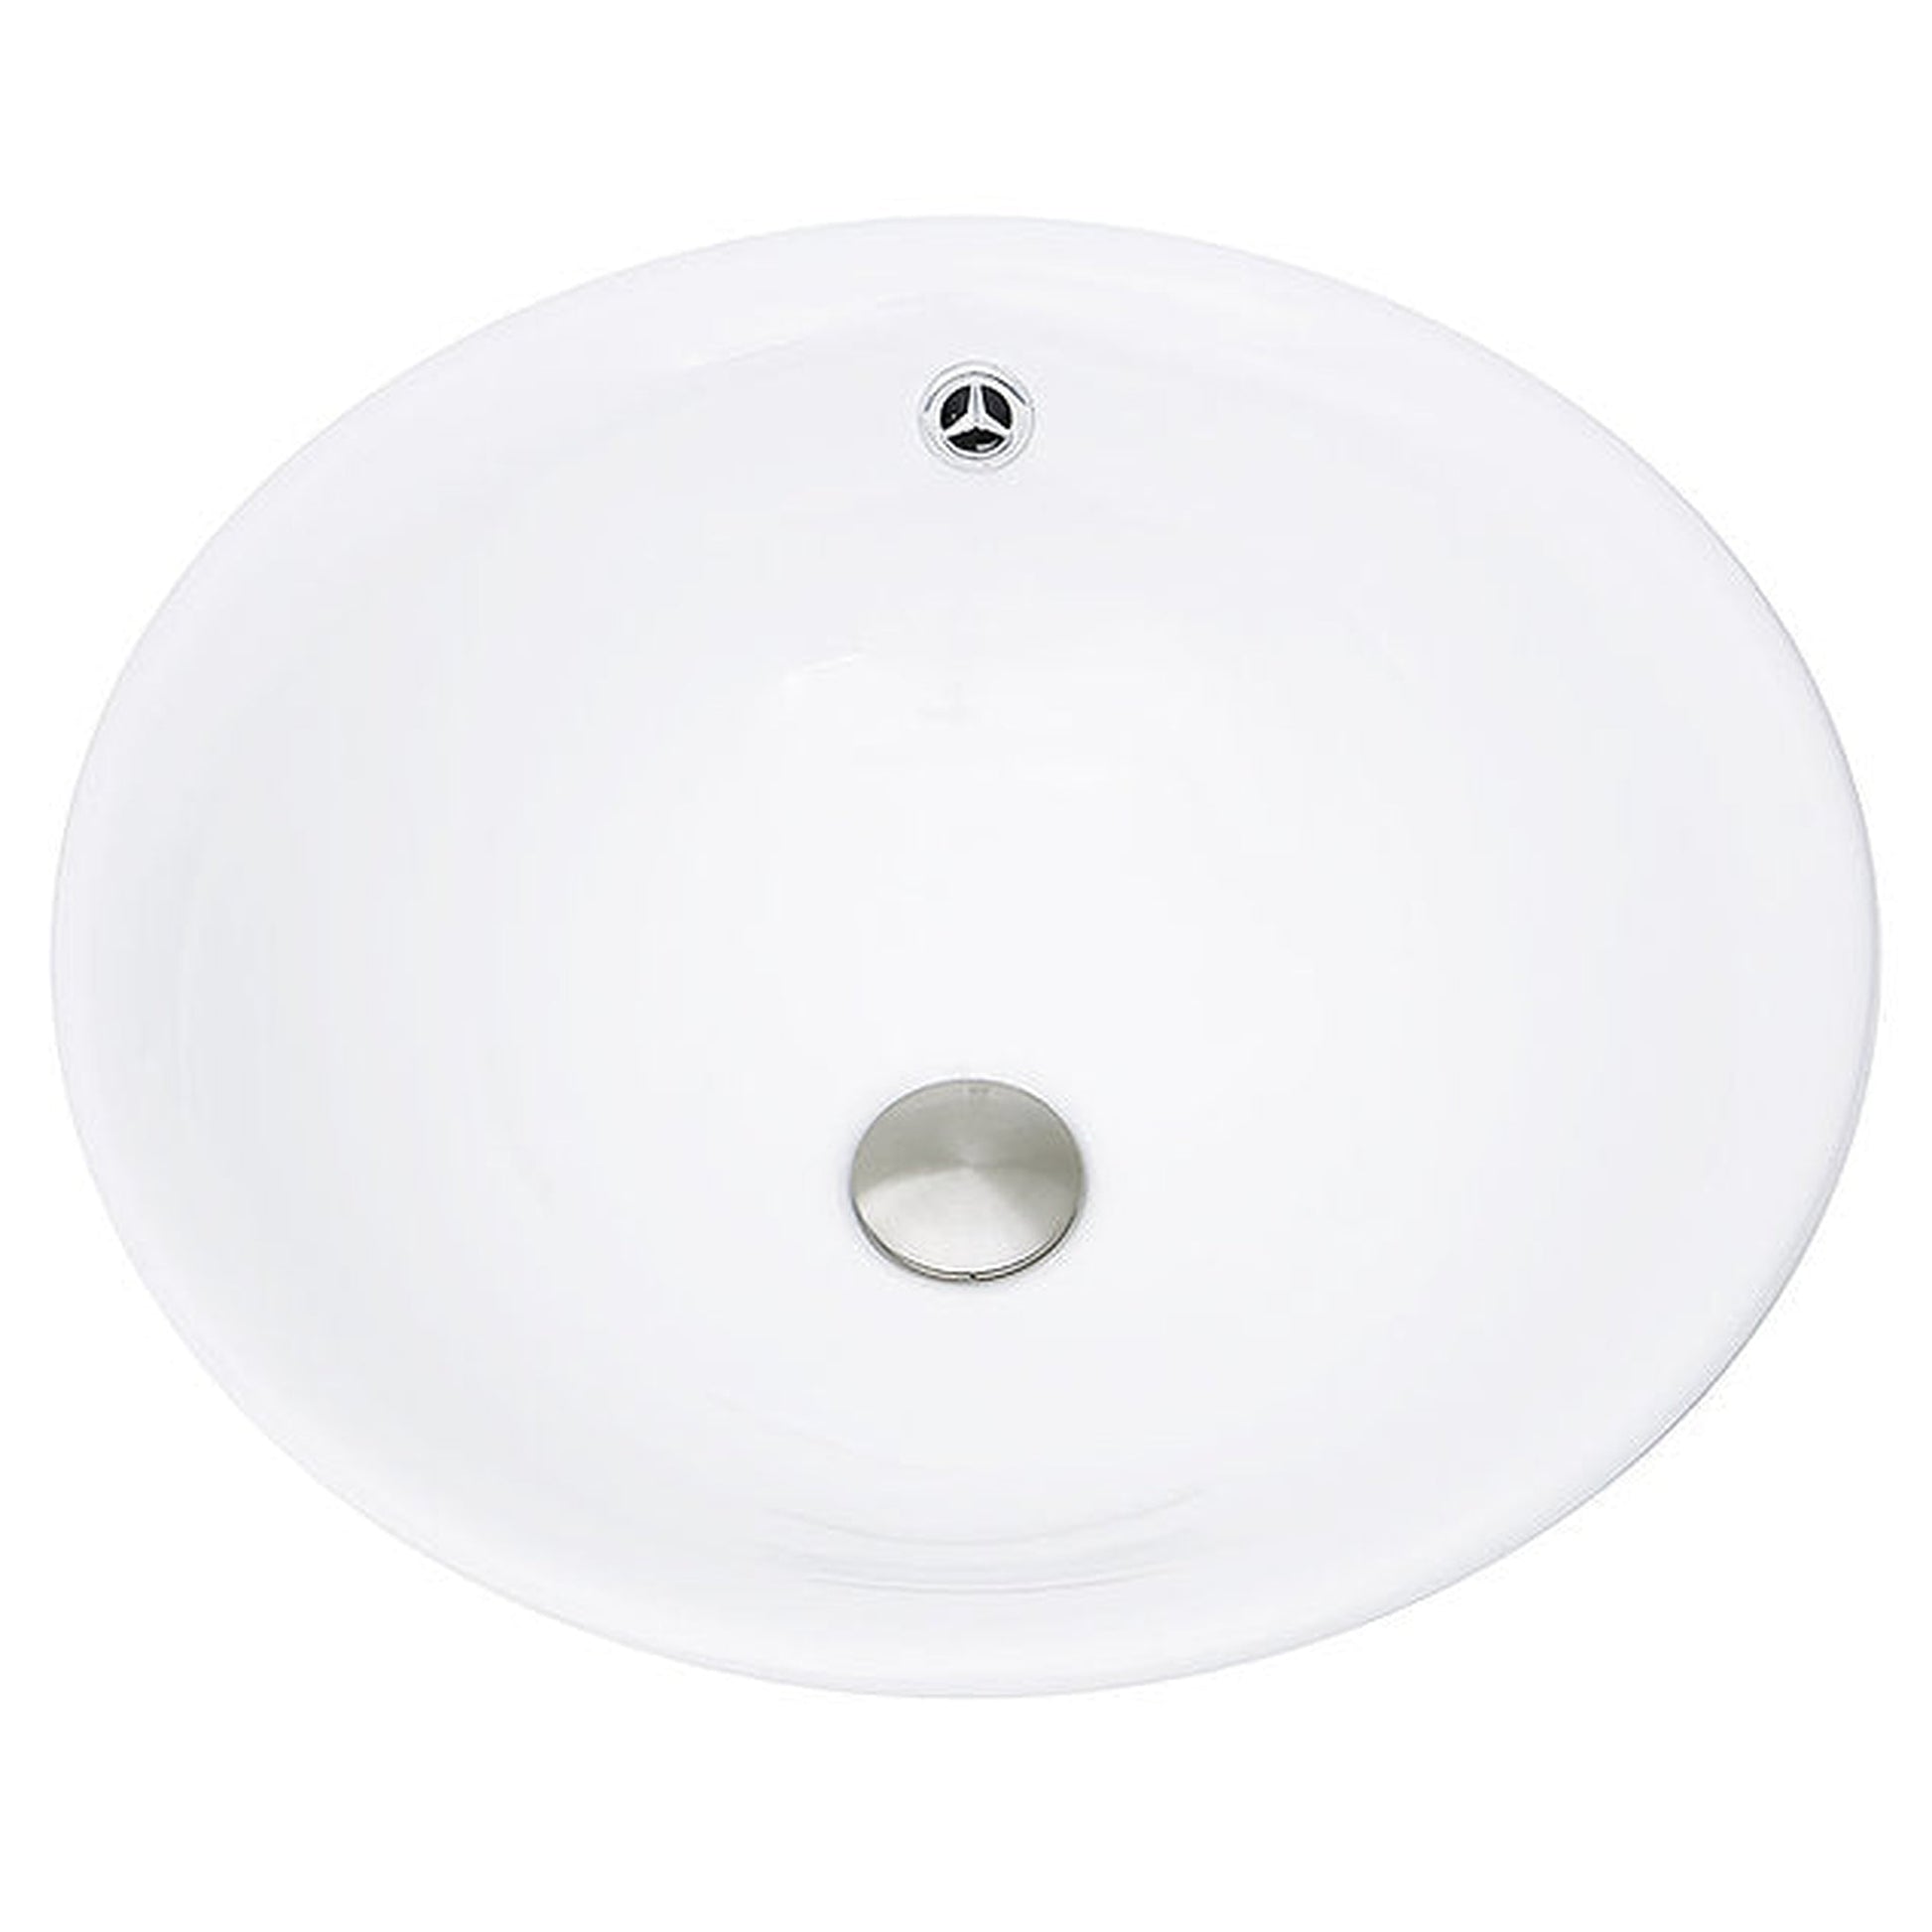 Nantucket Sinks Brant Point 17" Round Curved Porcelain Enamel Glazed White Ceramic Vessel Sink With Overflow